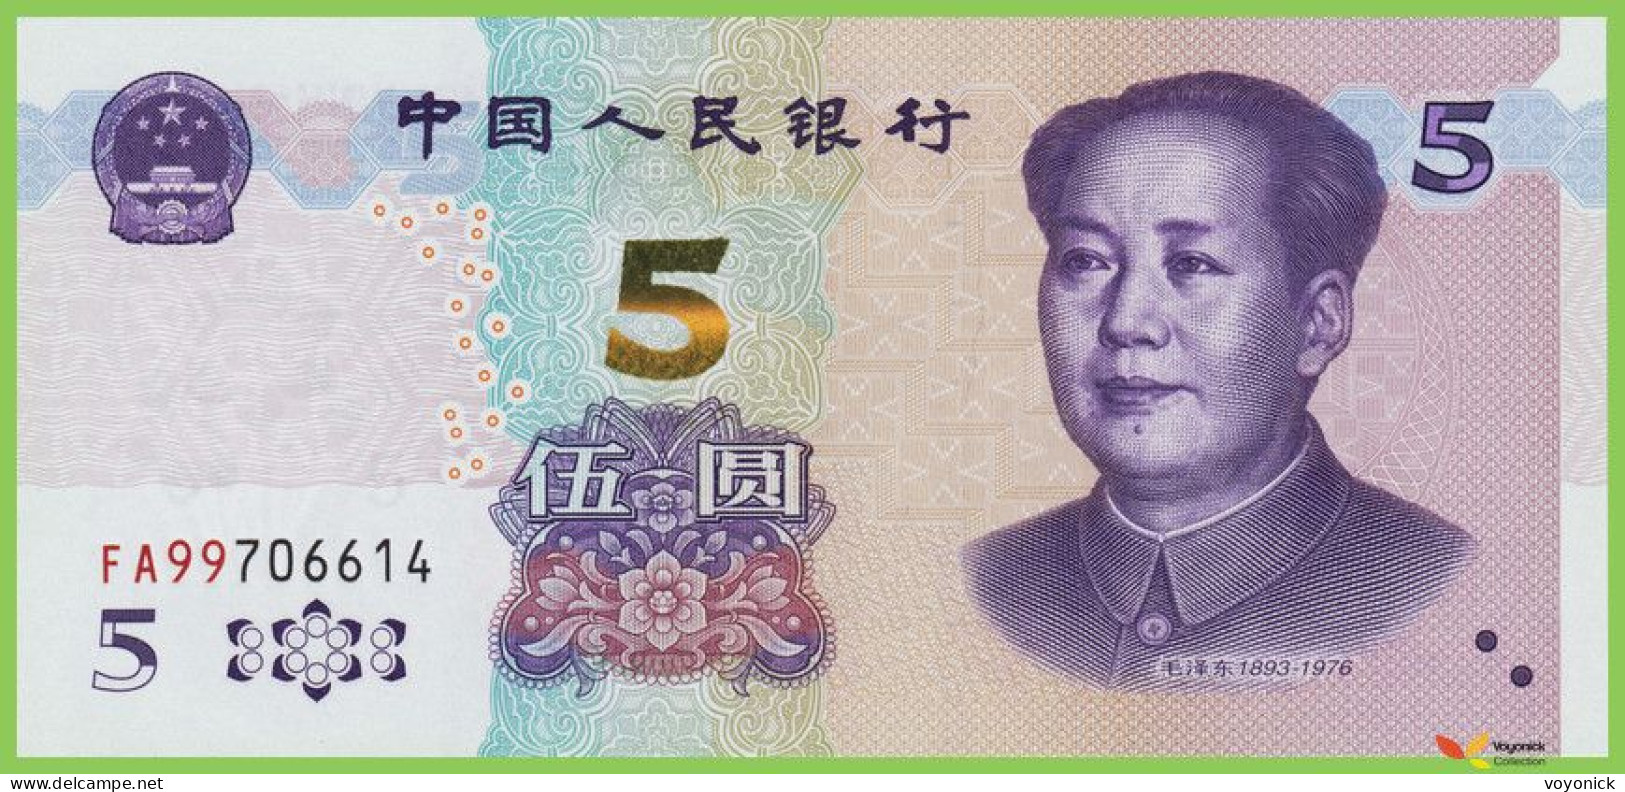 Voyo CHINA 5 Yuan 2020 P913 B4119a FA99 UNC - China